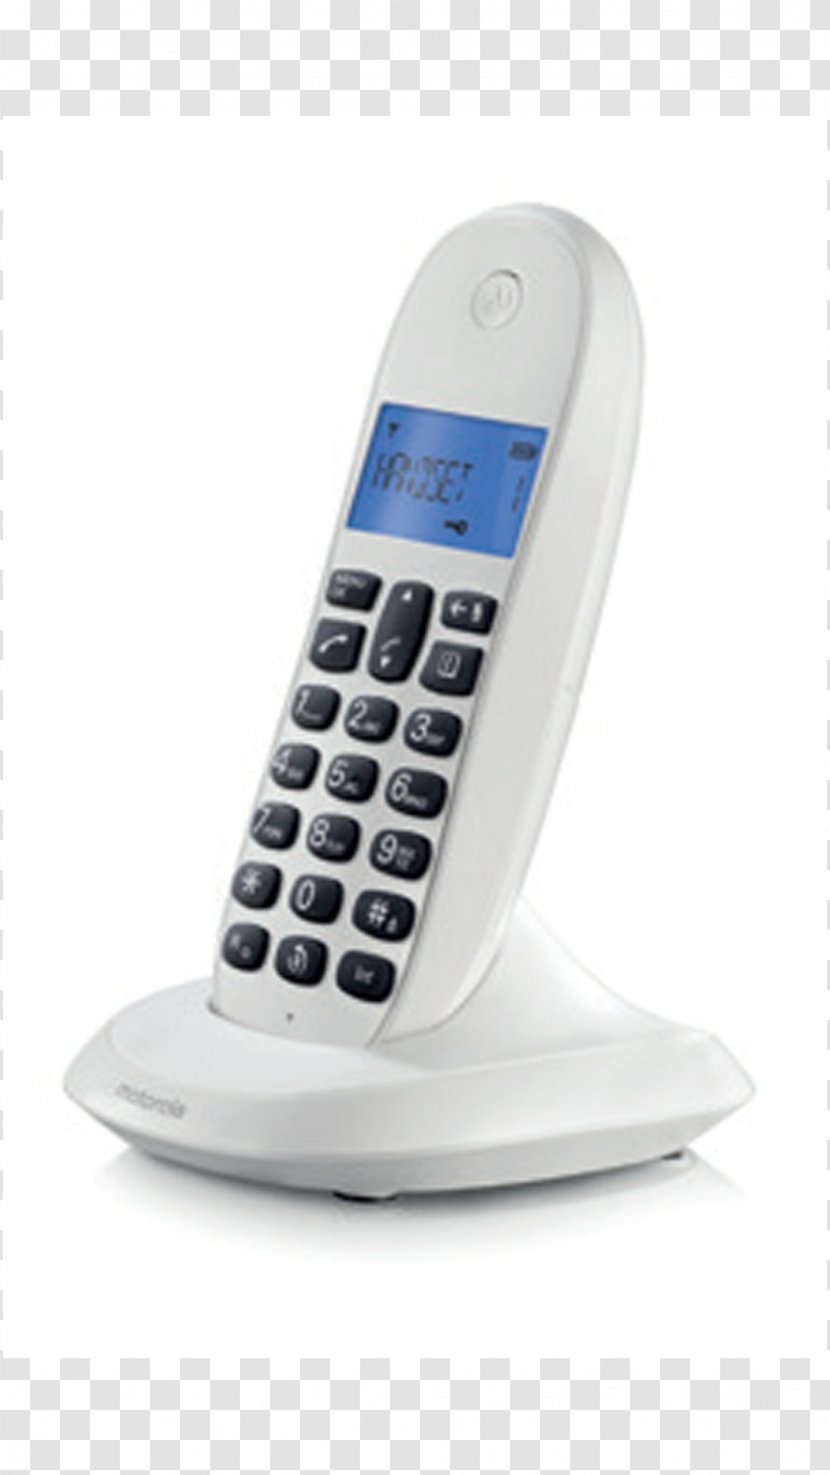 Cordless Telephone Home & Business Phones Mobile Digital Enhanced Telecommunications - Answering Machines - Motorola Transparent PNG